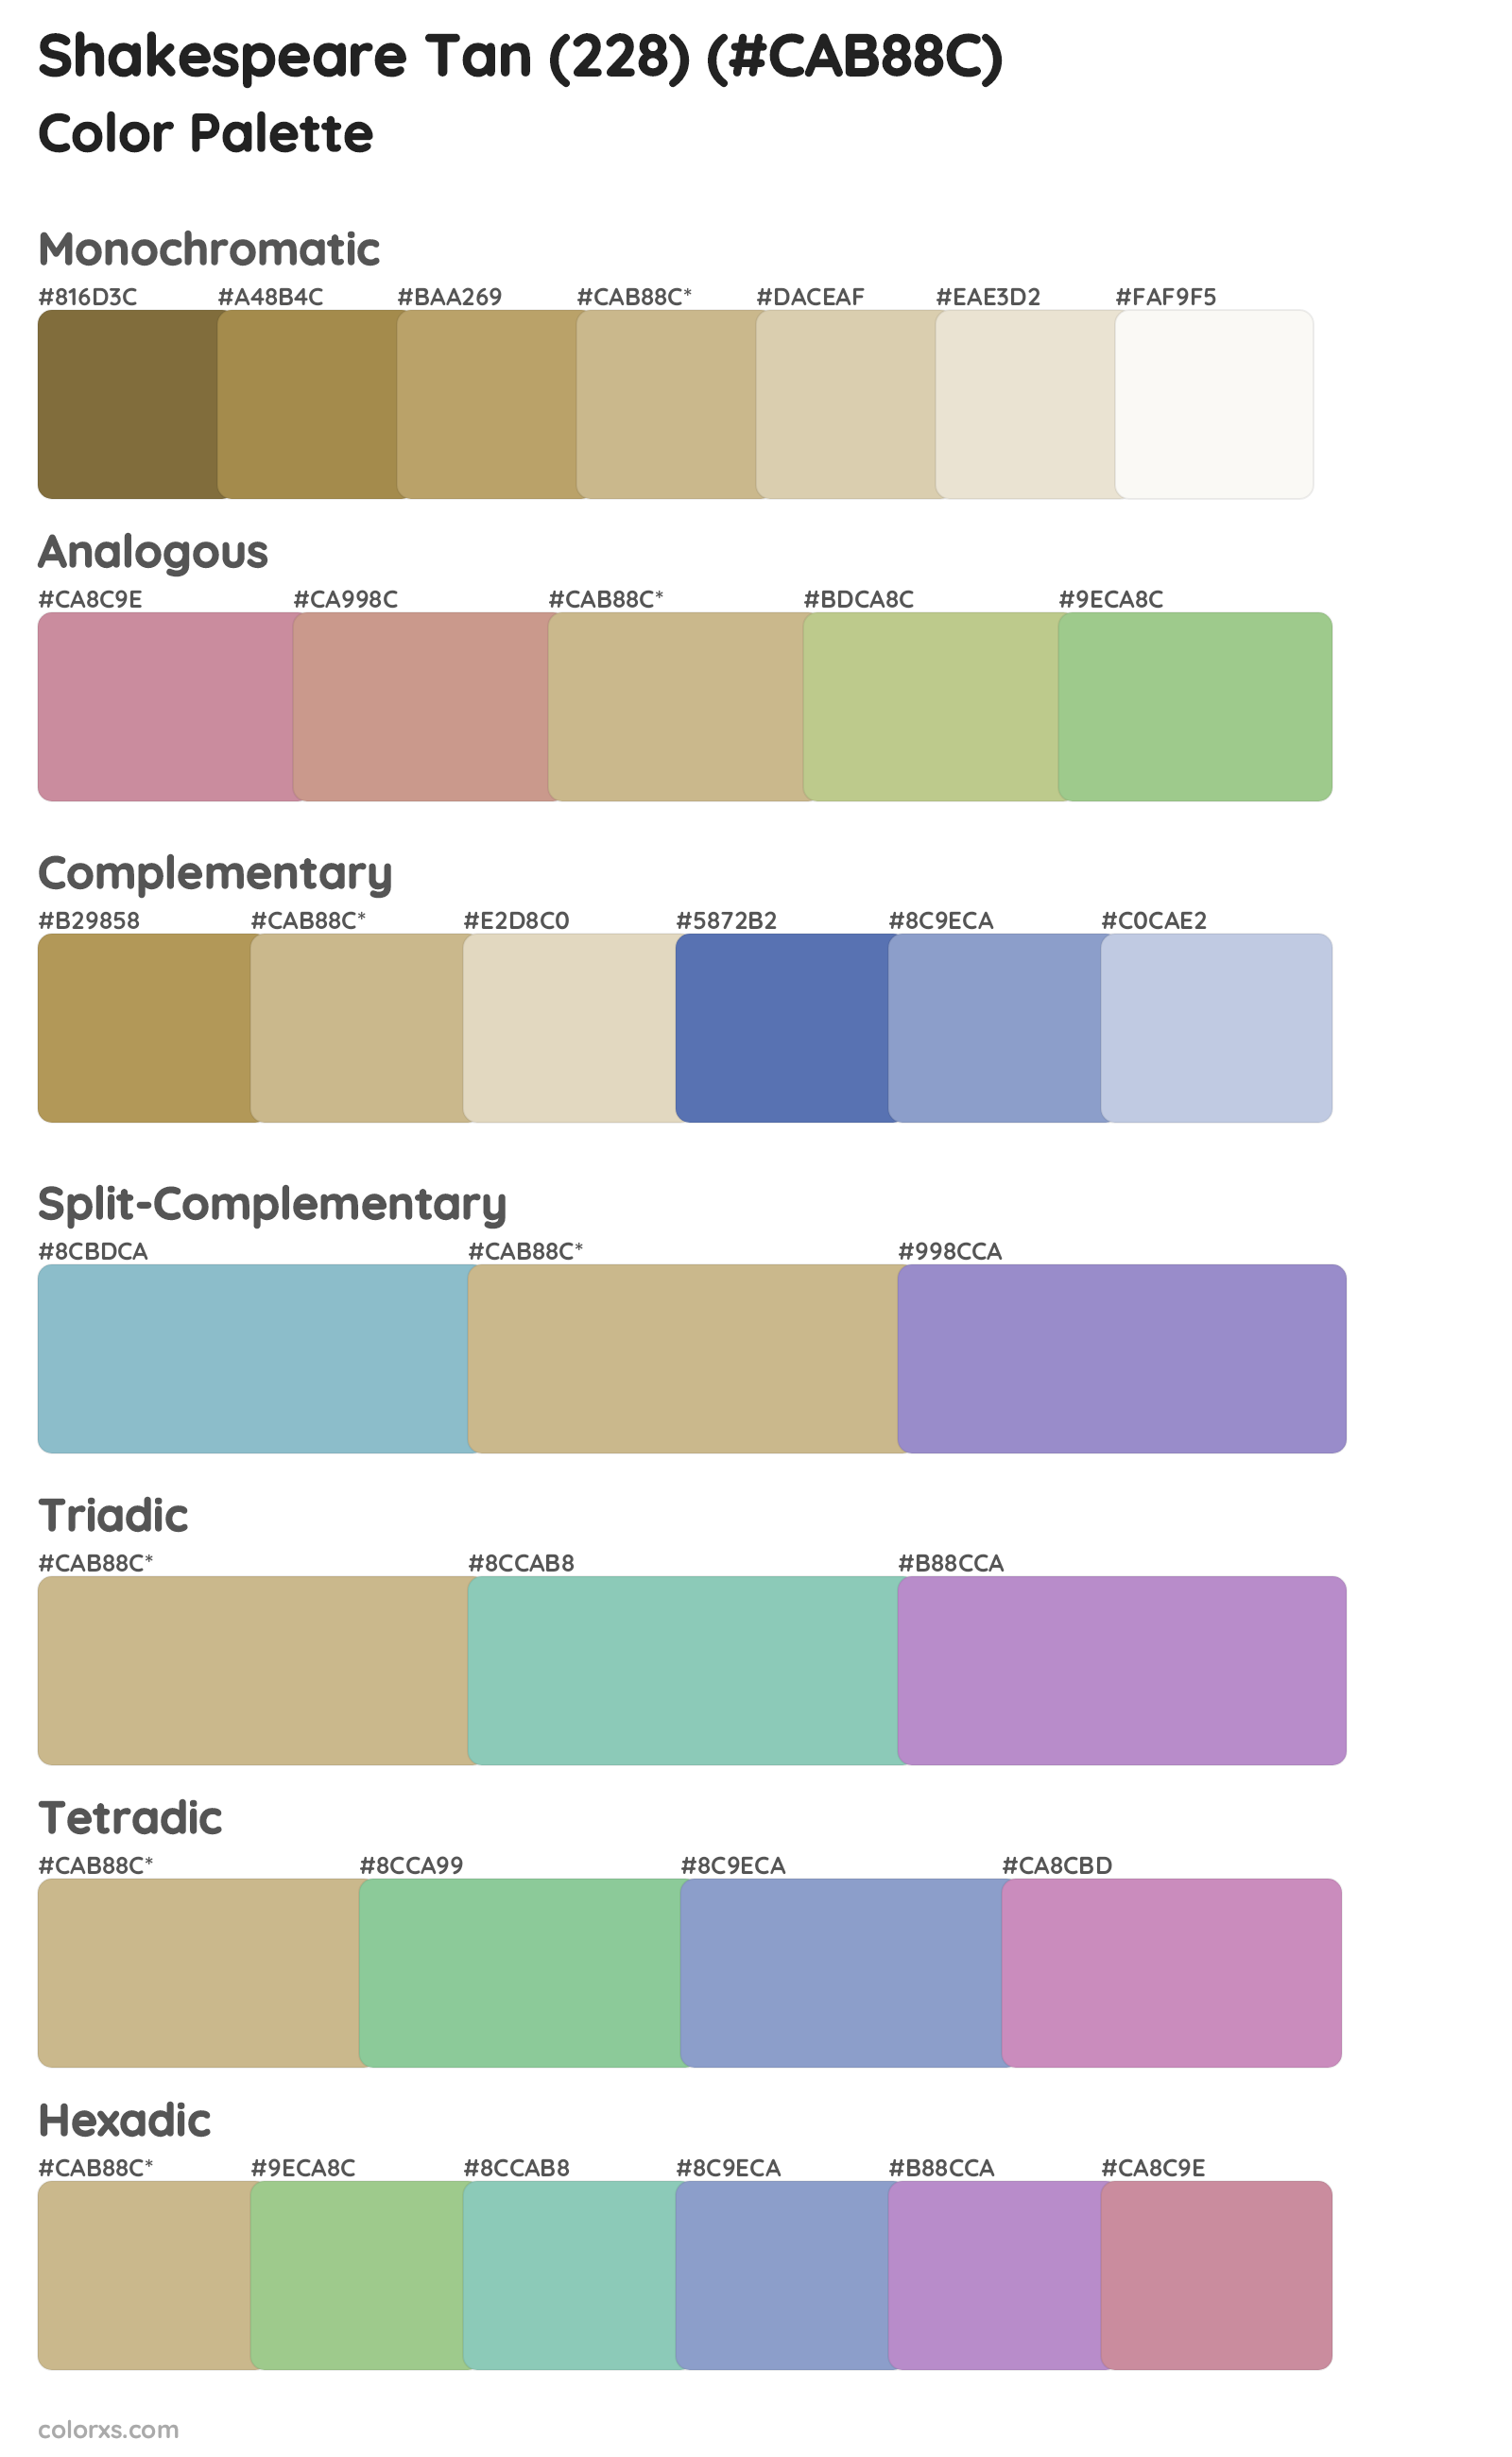 Shakespeare Tan (228) Color Scheme Palettes